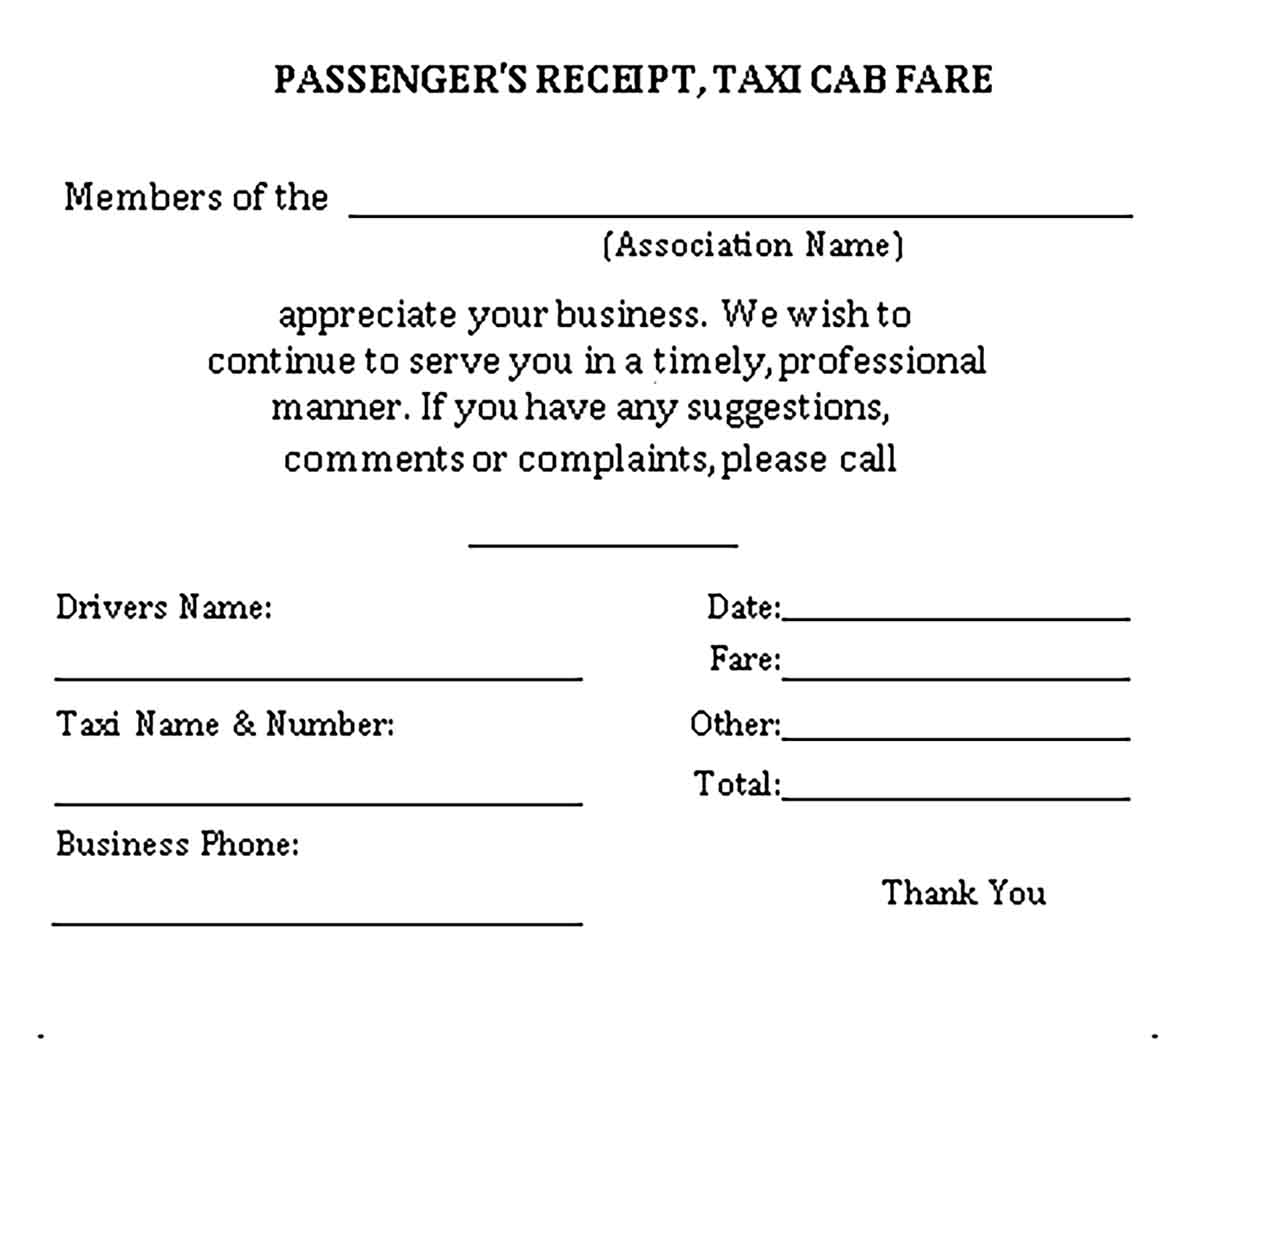 Sample of a Taxi Receipt Templates